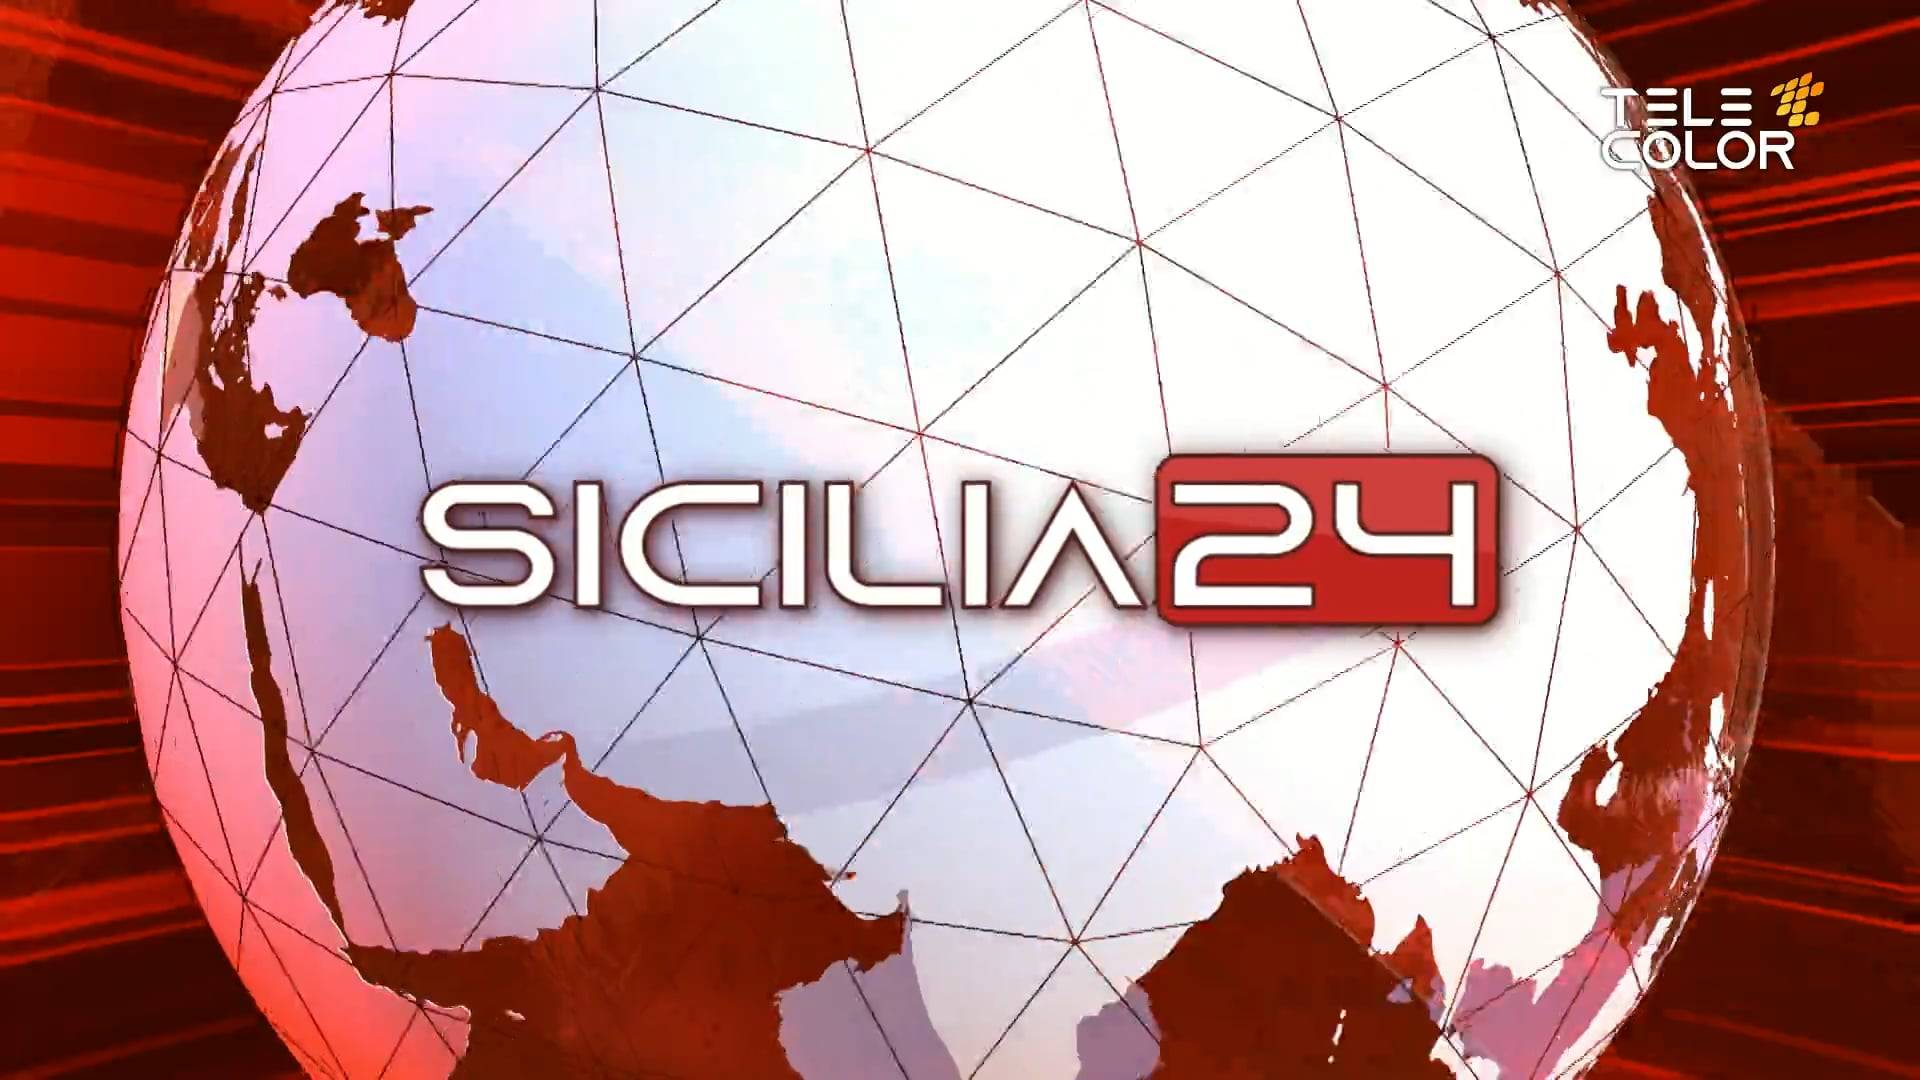 sicilia24-15-marzo-2023-ore-14-vimeo-thumbnail.jpg